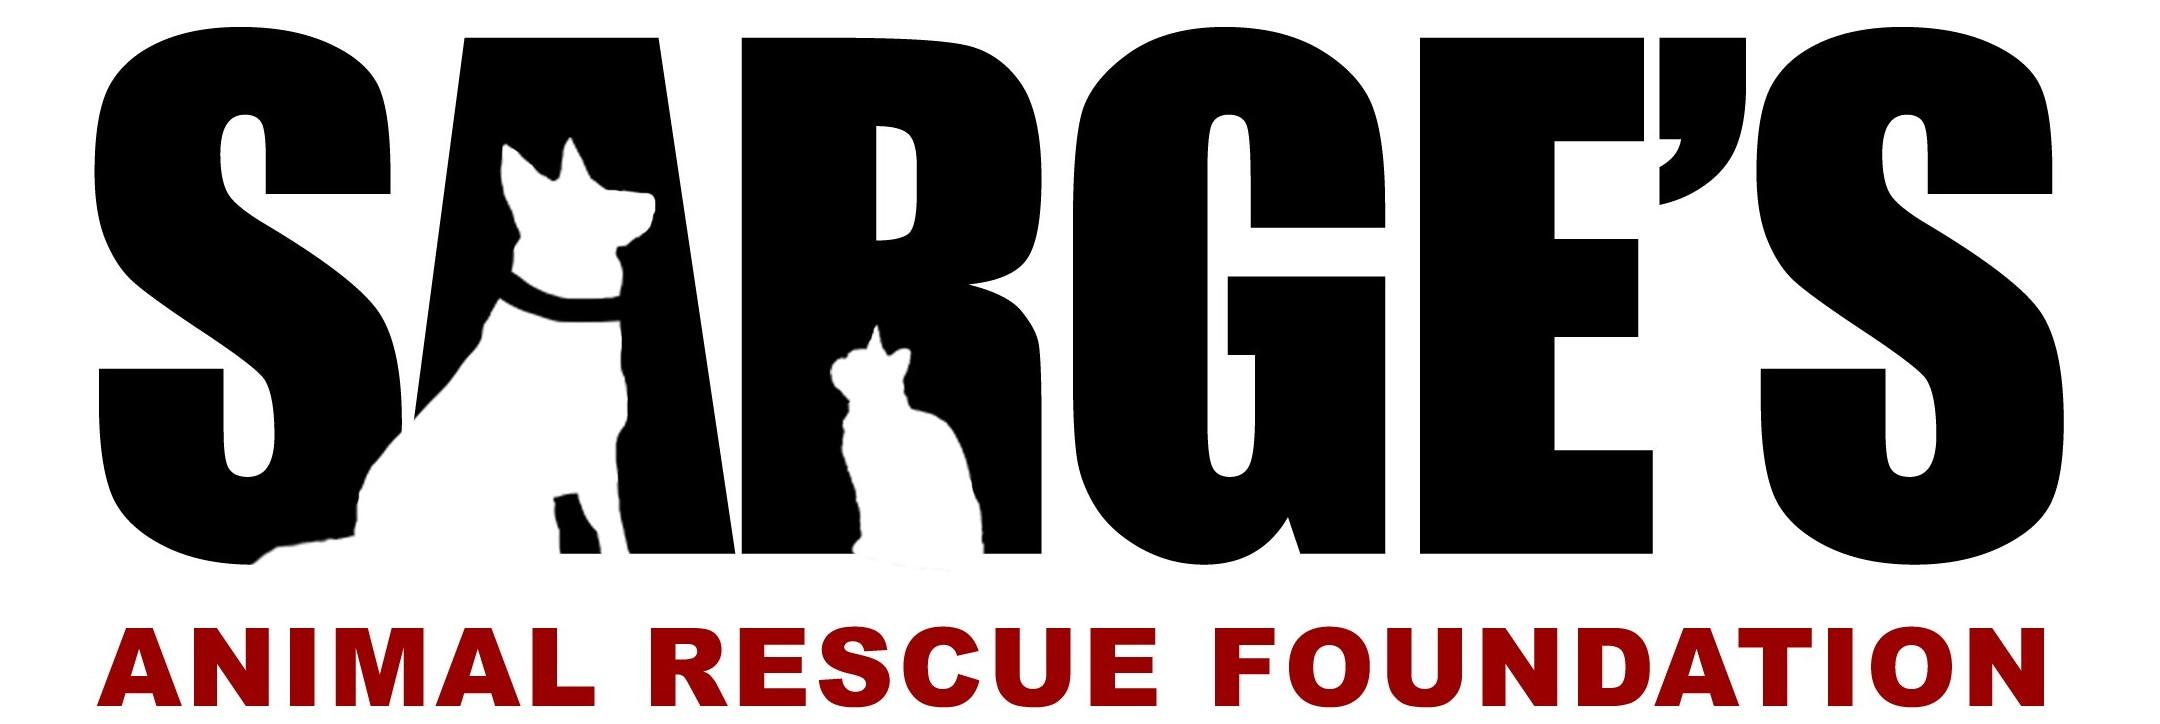 Sarge's Animal Rescue Foundation, Inc.